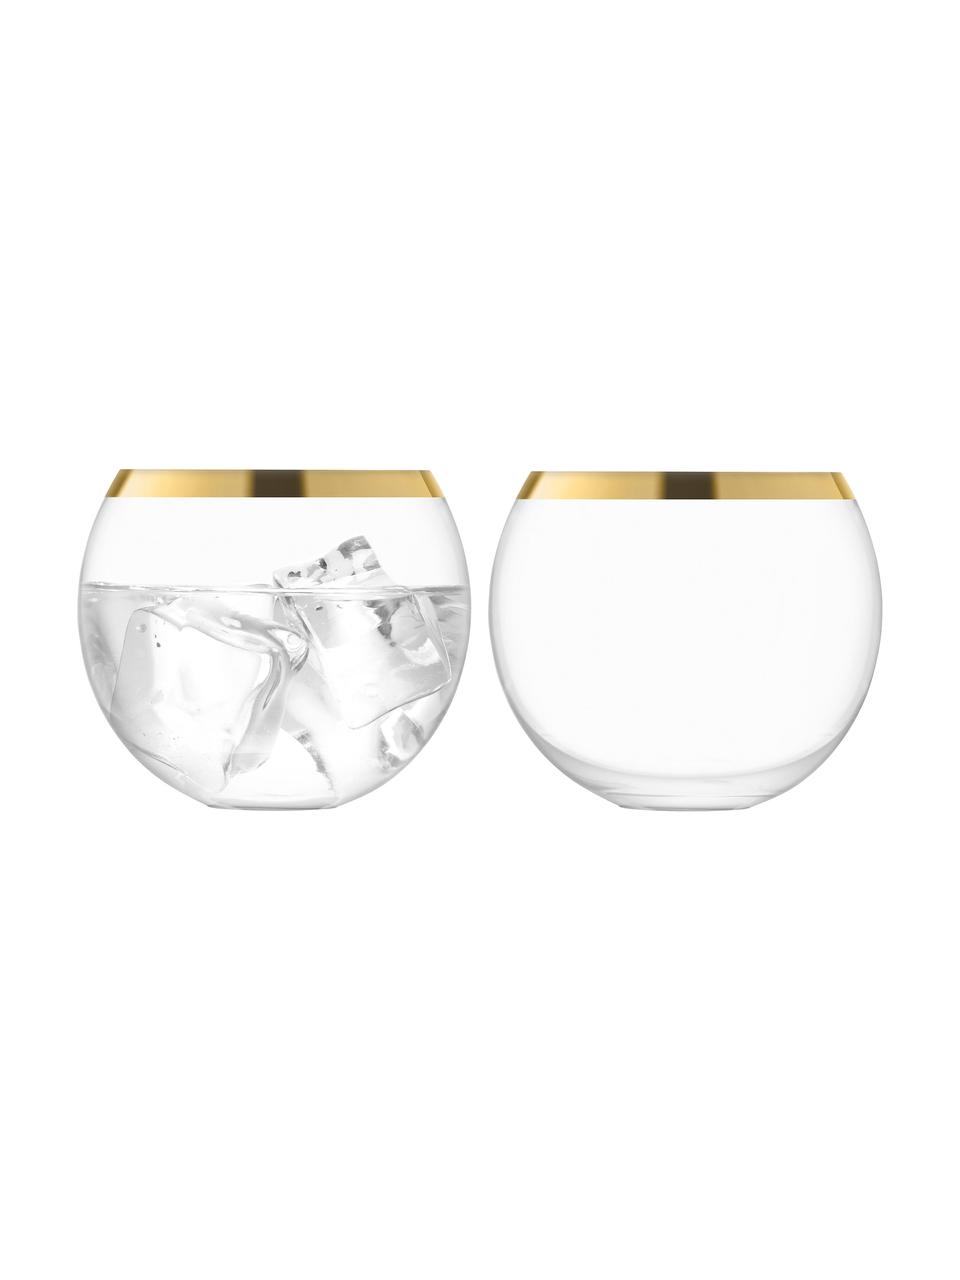 Copas de cóctel de vidrio soplado artesananalmente Luca, 2 uds., Vidrio, Transparente con borde dorado, Ø 9 x Al 8 cm, 330 ml